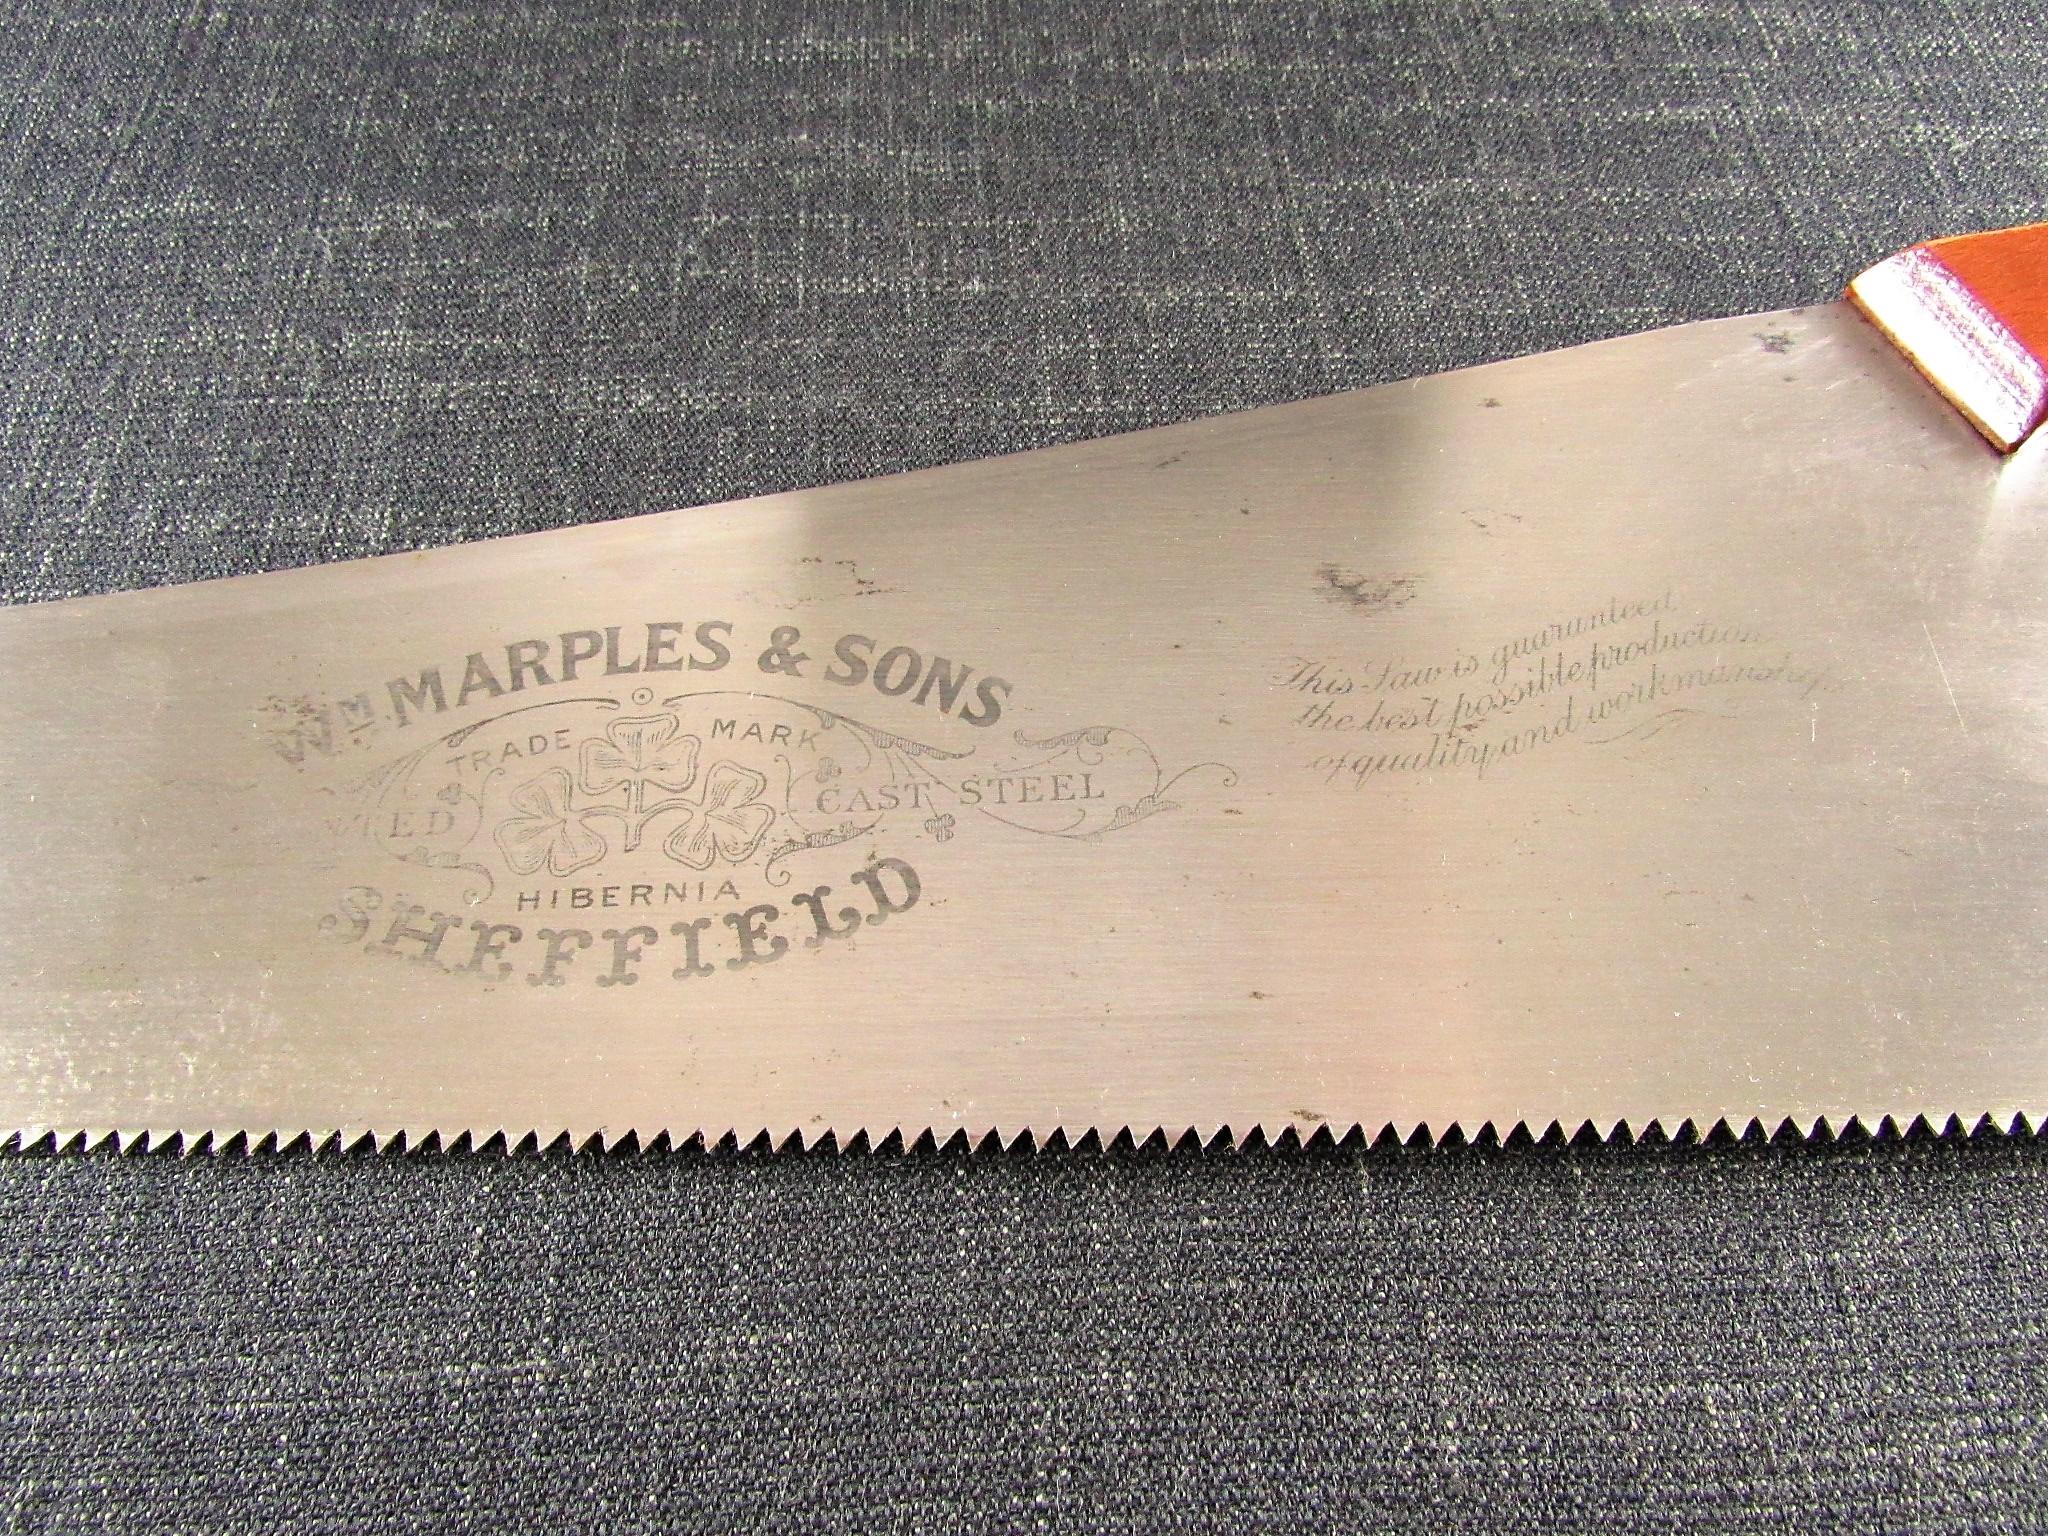 MARPLES Panel Saw - No.2521 24 inch Rip Cut